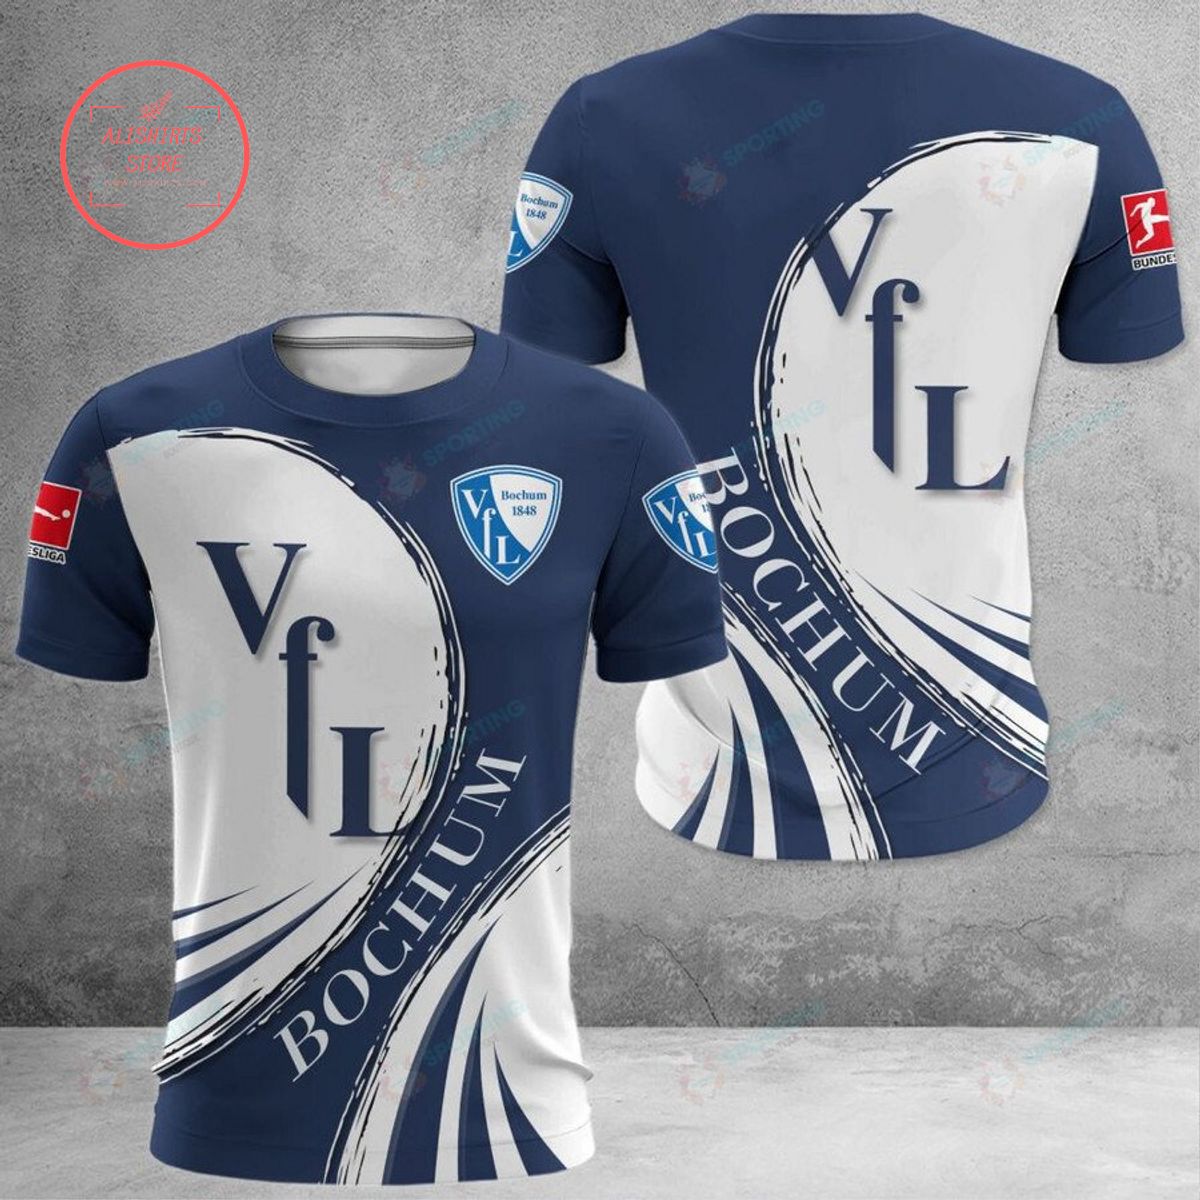 VfL Bochum Polo Shirt